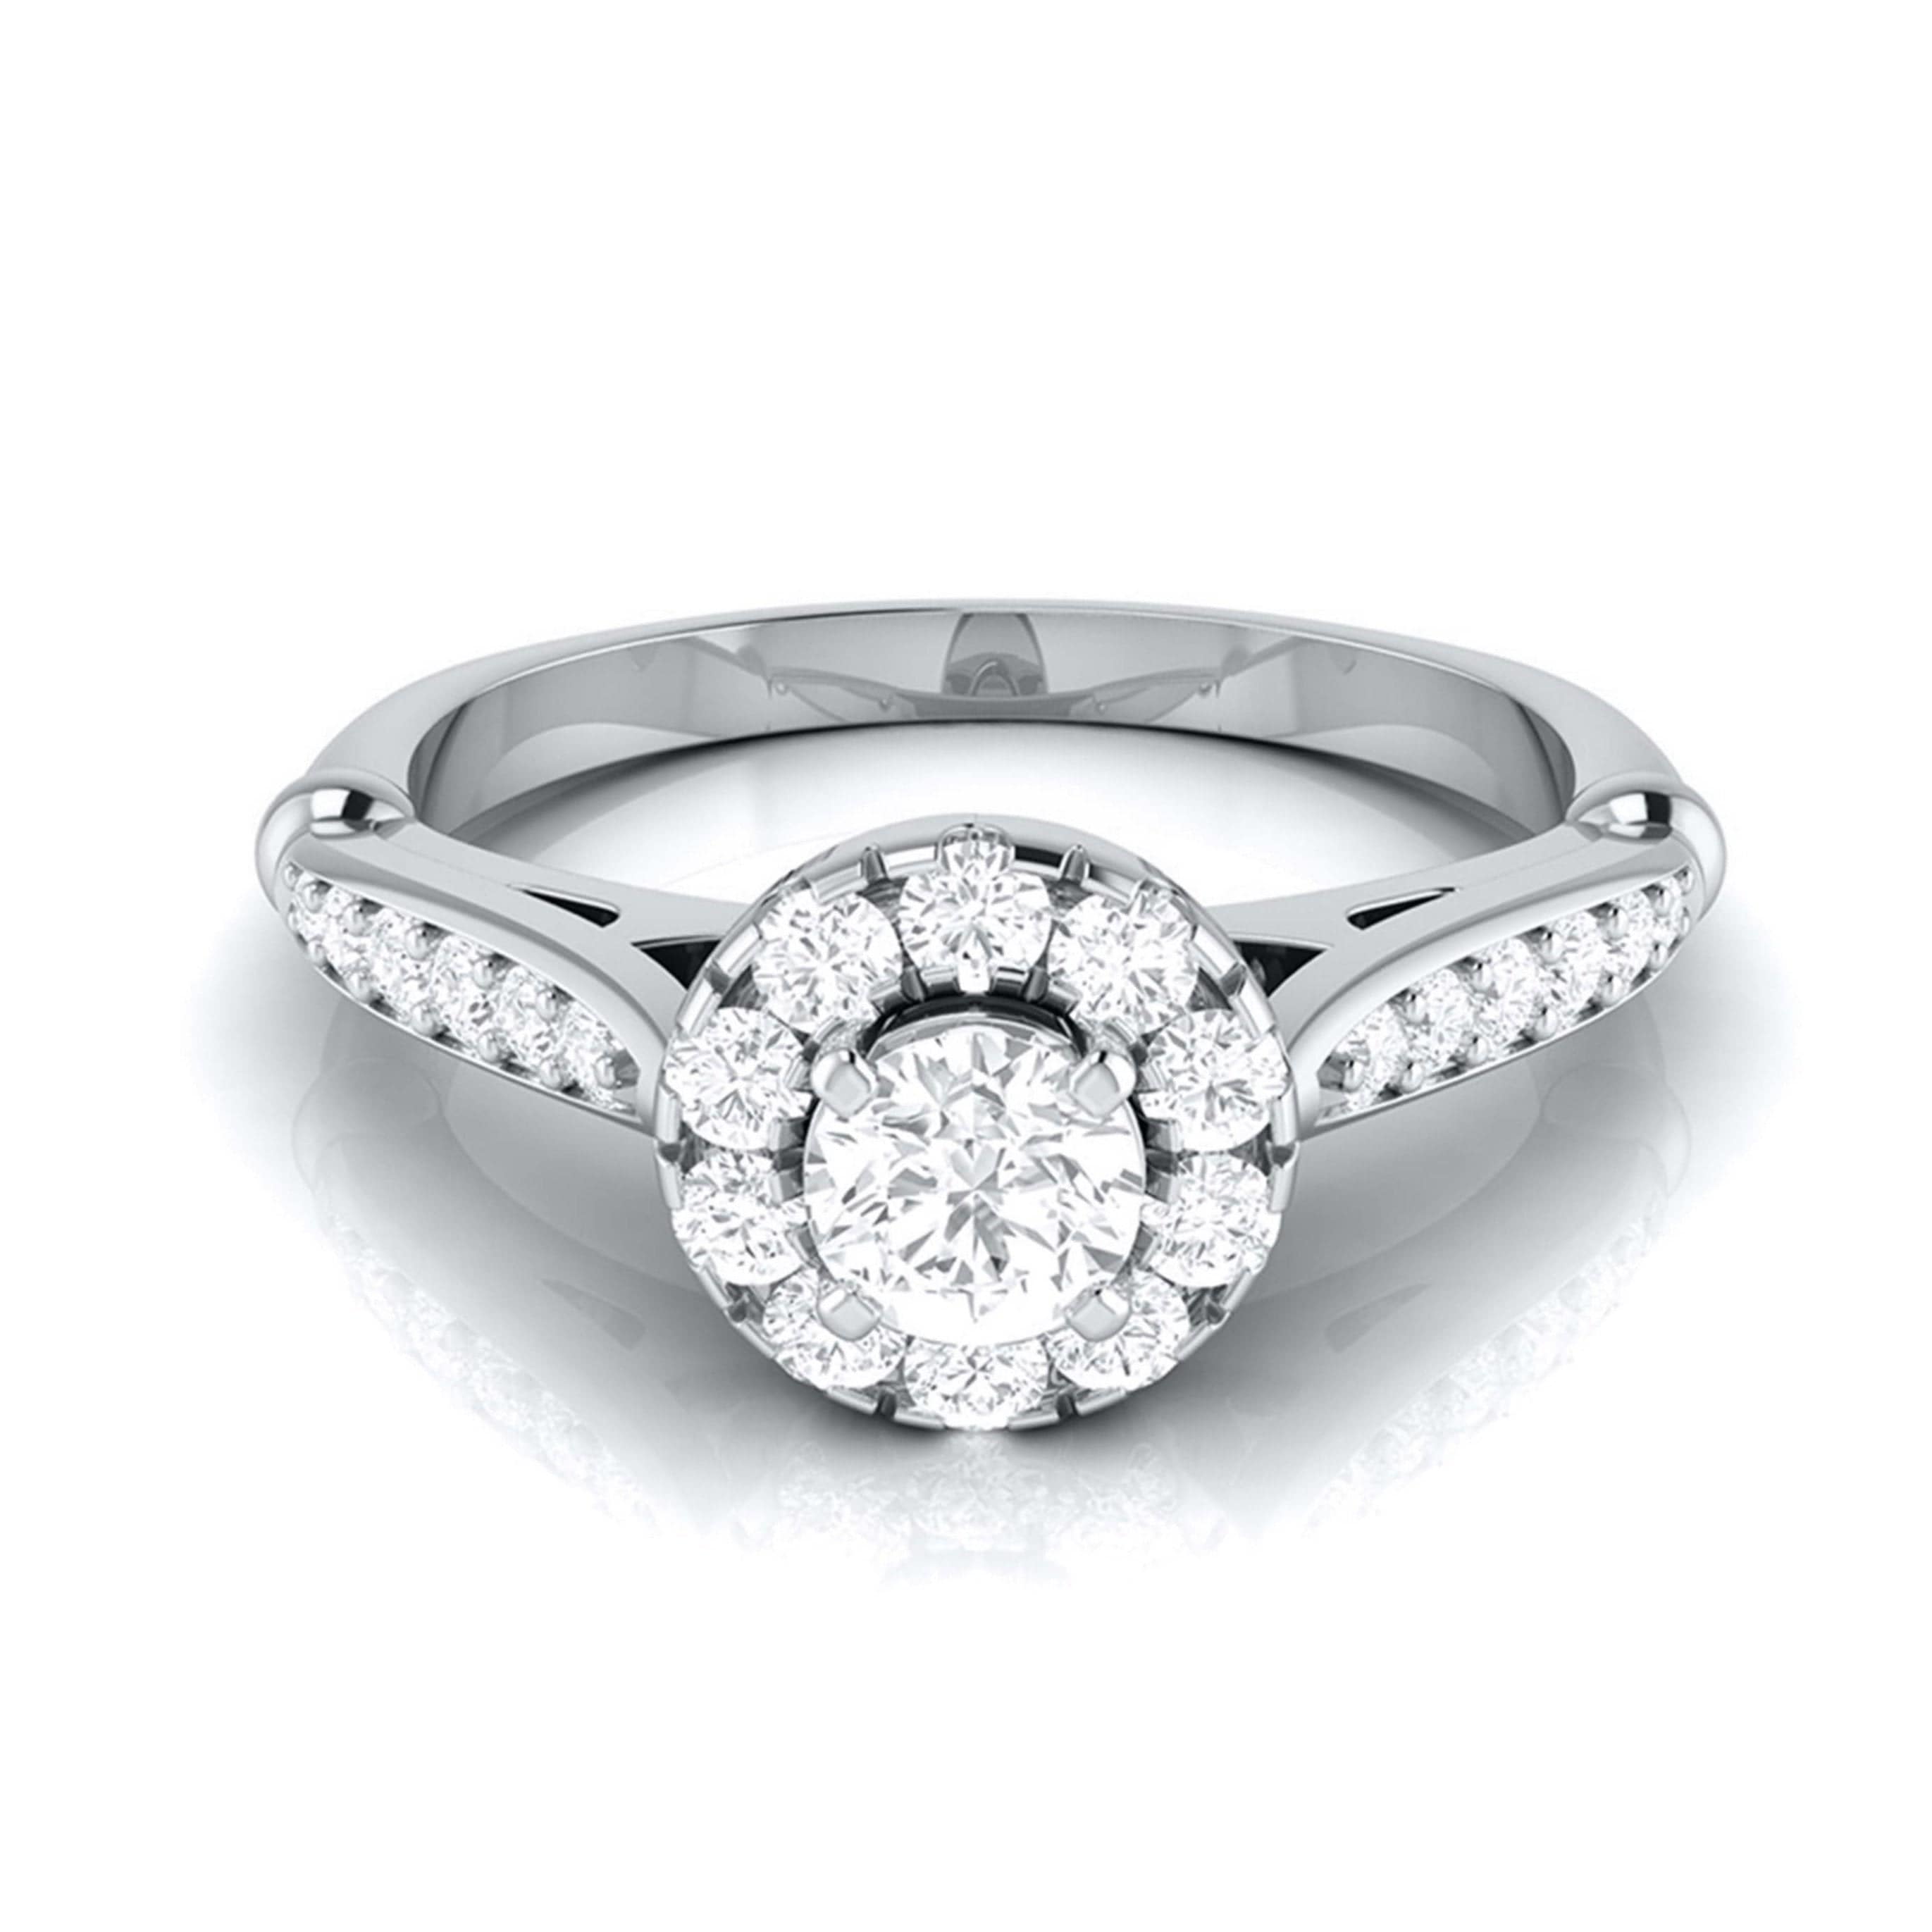 1.15 Carat Natural Round Cut Diamond Halo Engagement Ring 14K White Gold  E/VS2 | eBay